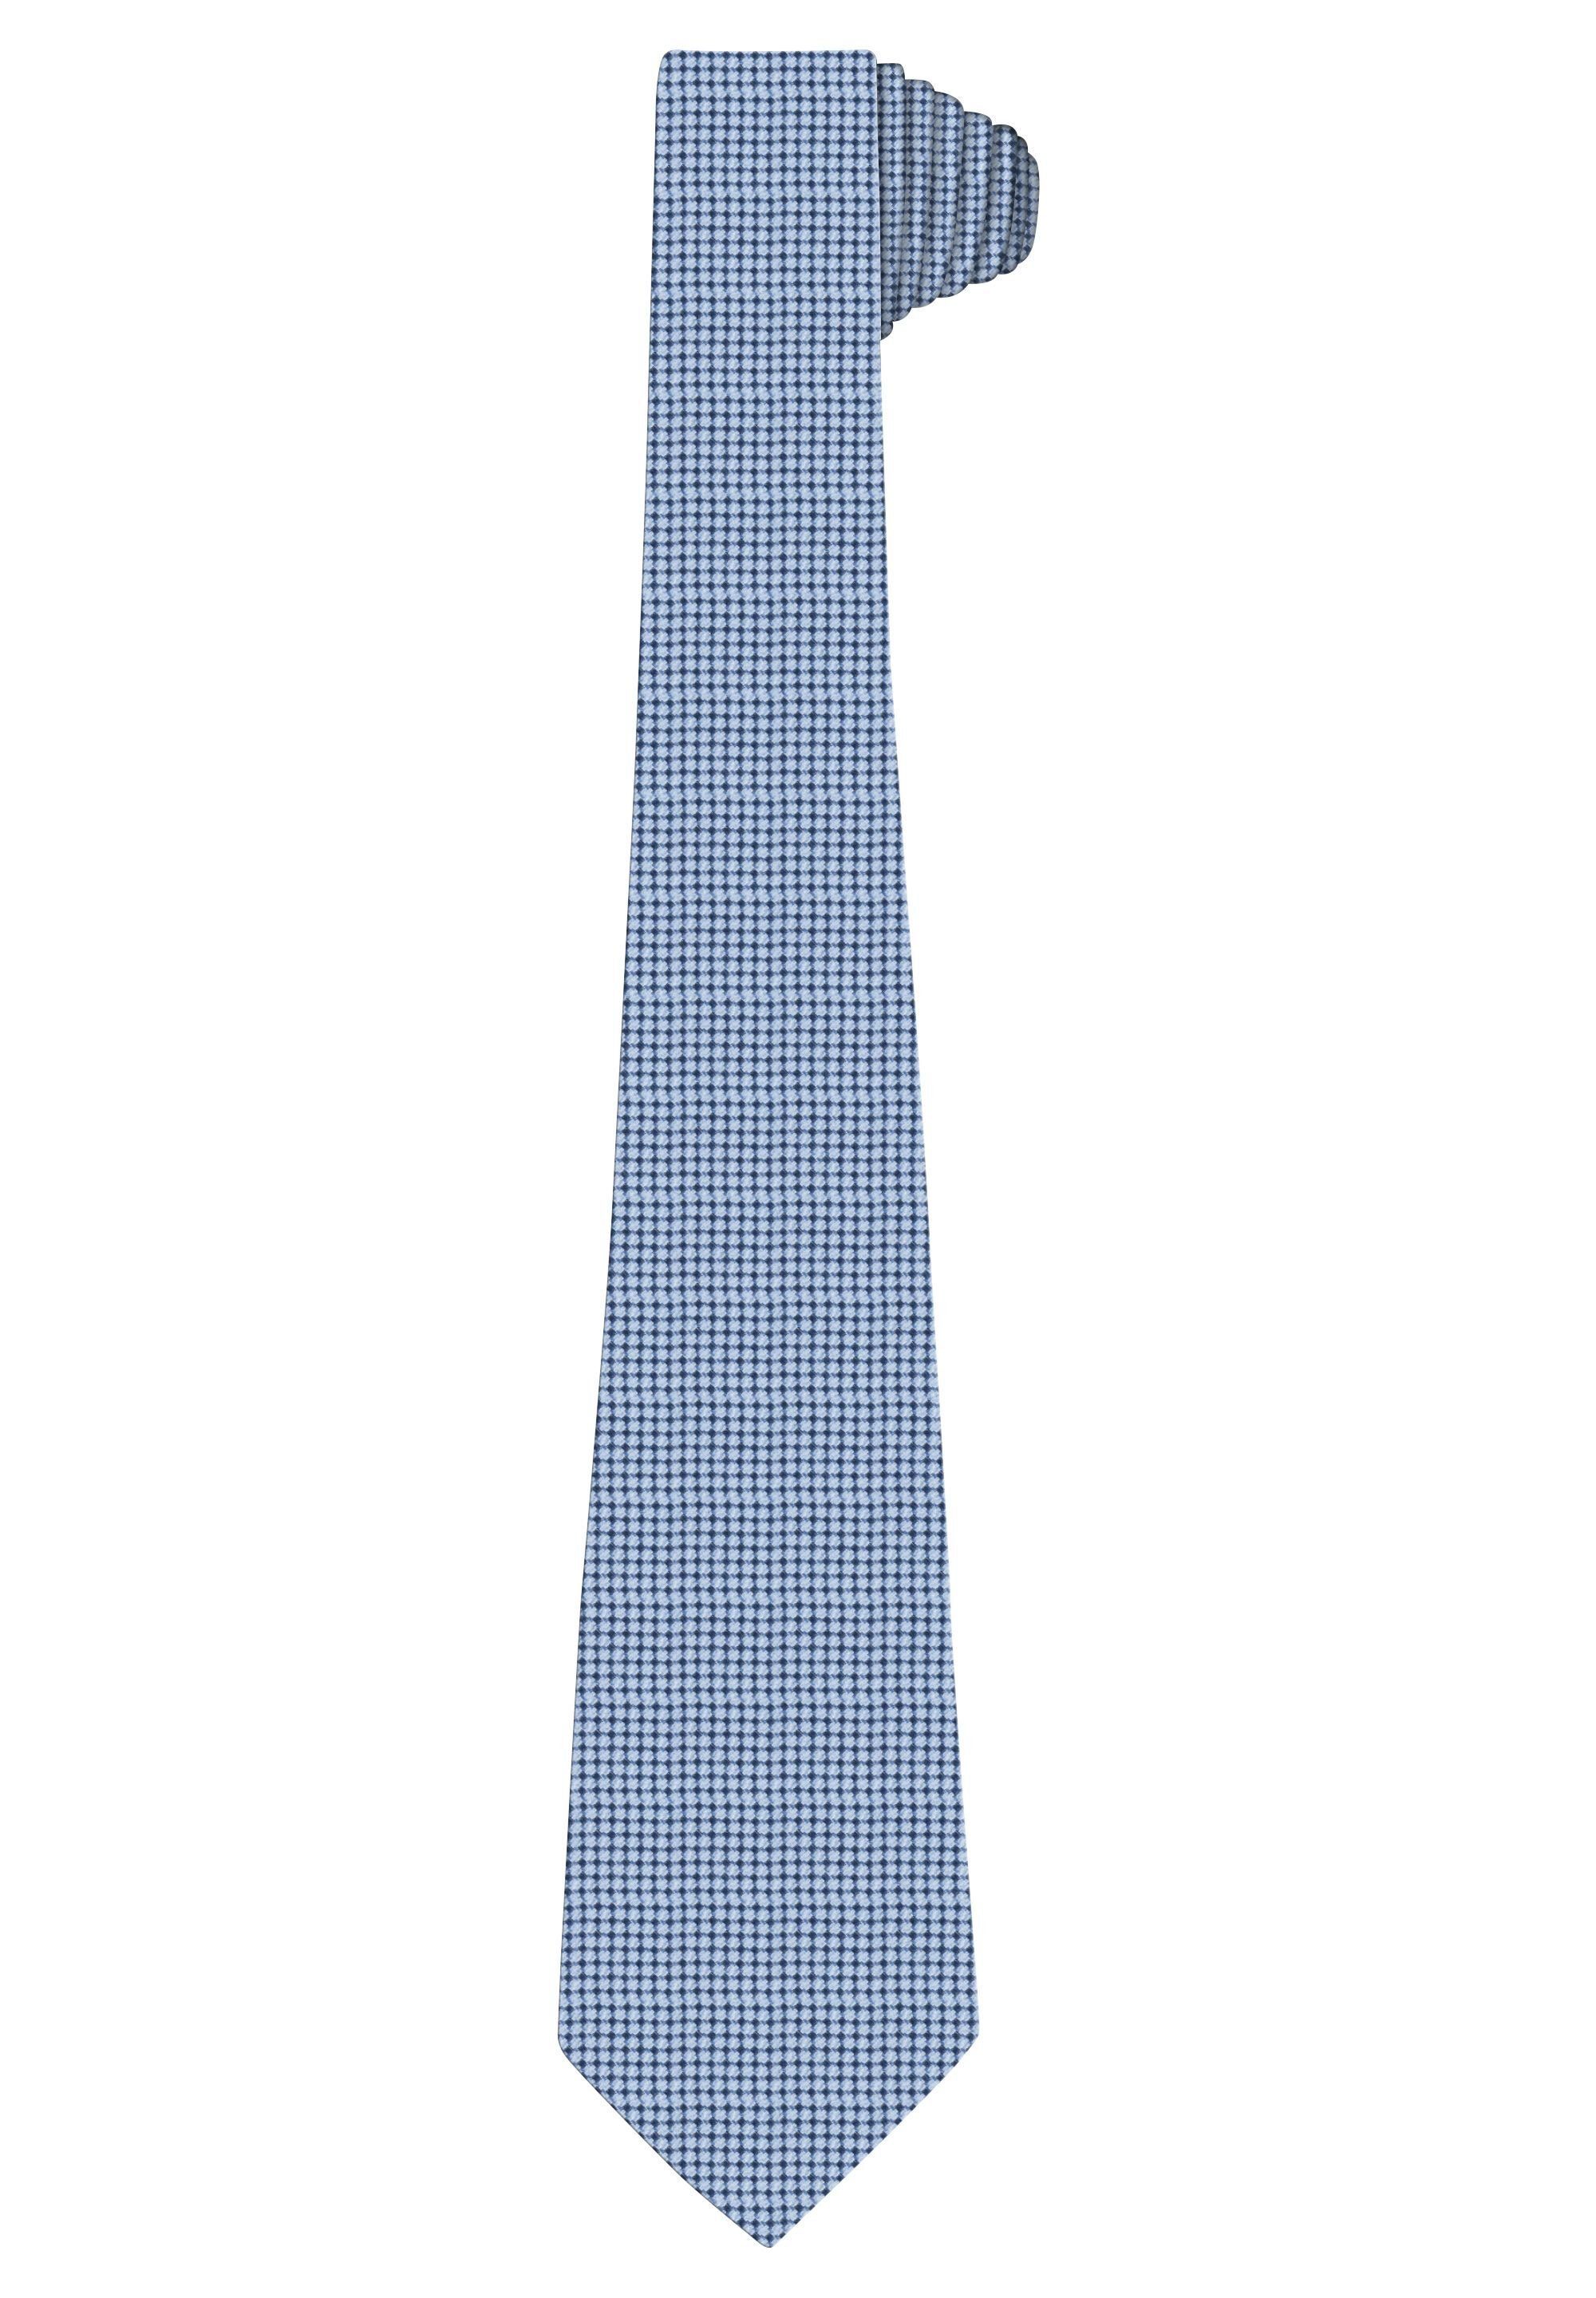 HECHTER PARIS sky blue Modische mit Krawatte Musterung